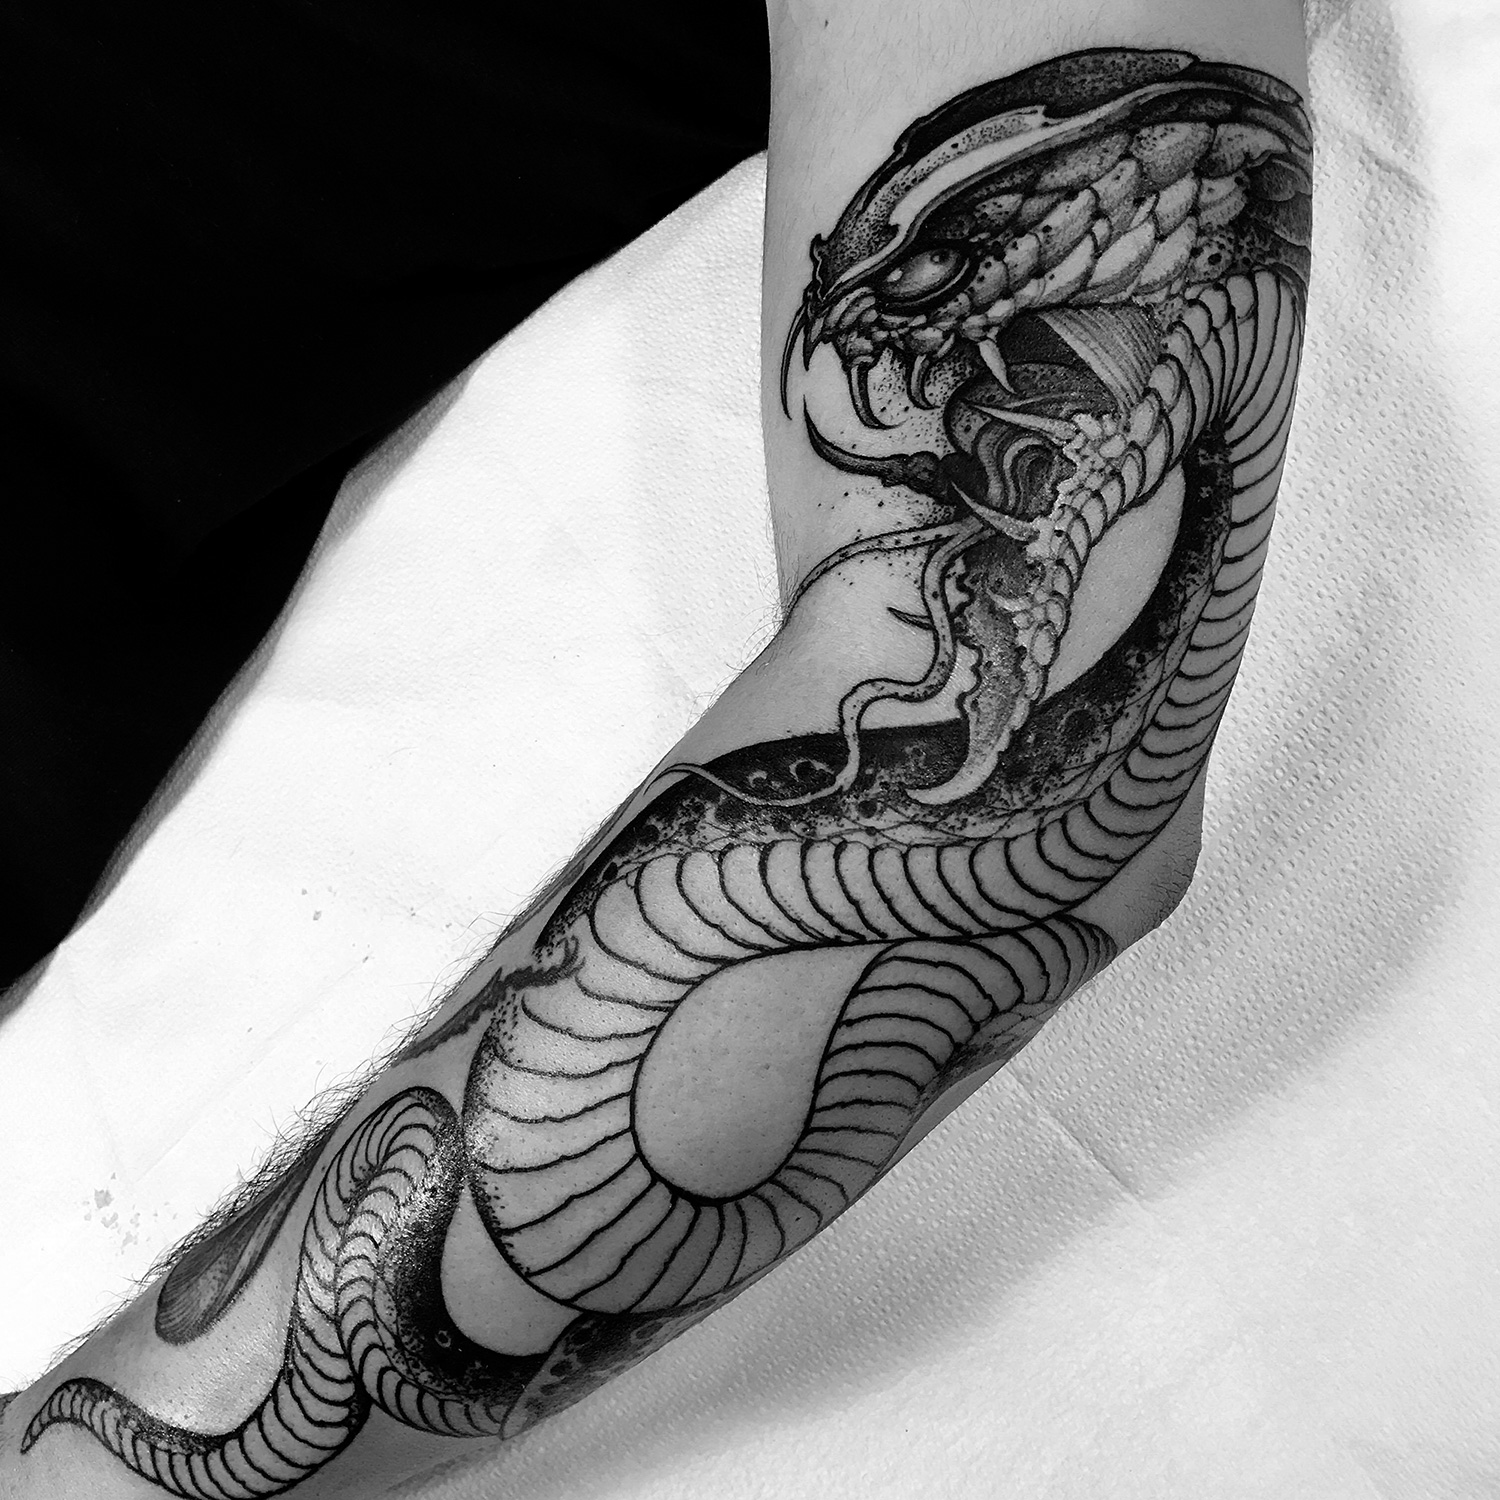 Joao Bosco - sacred snake tattoo